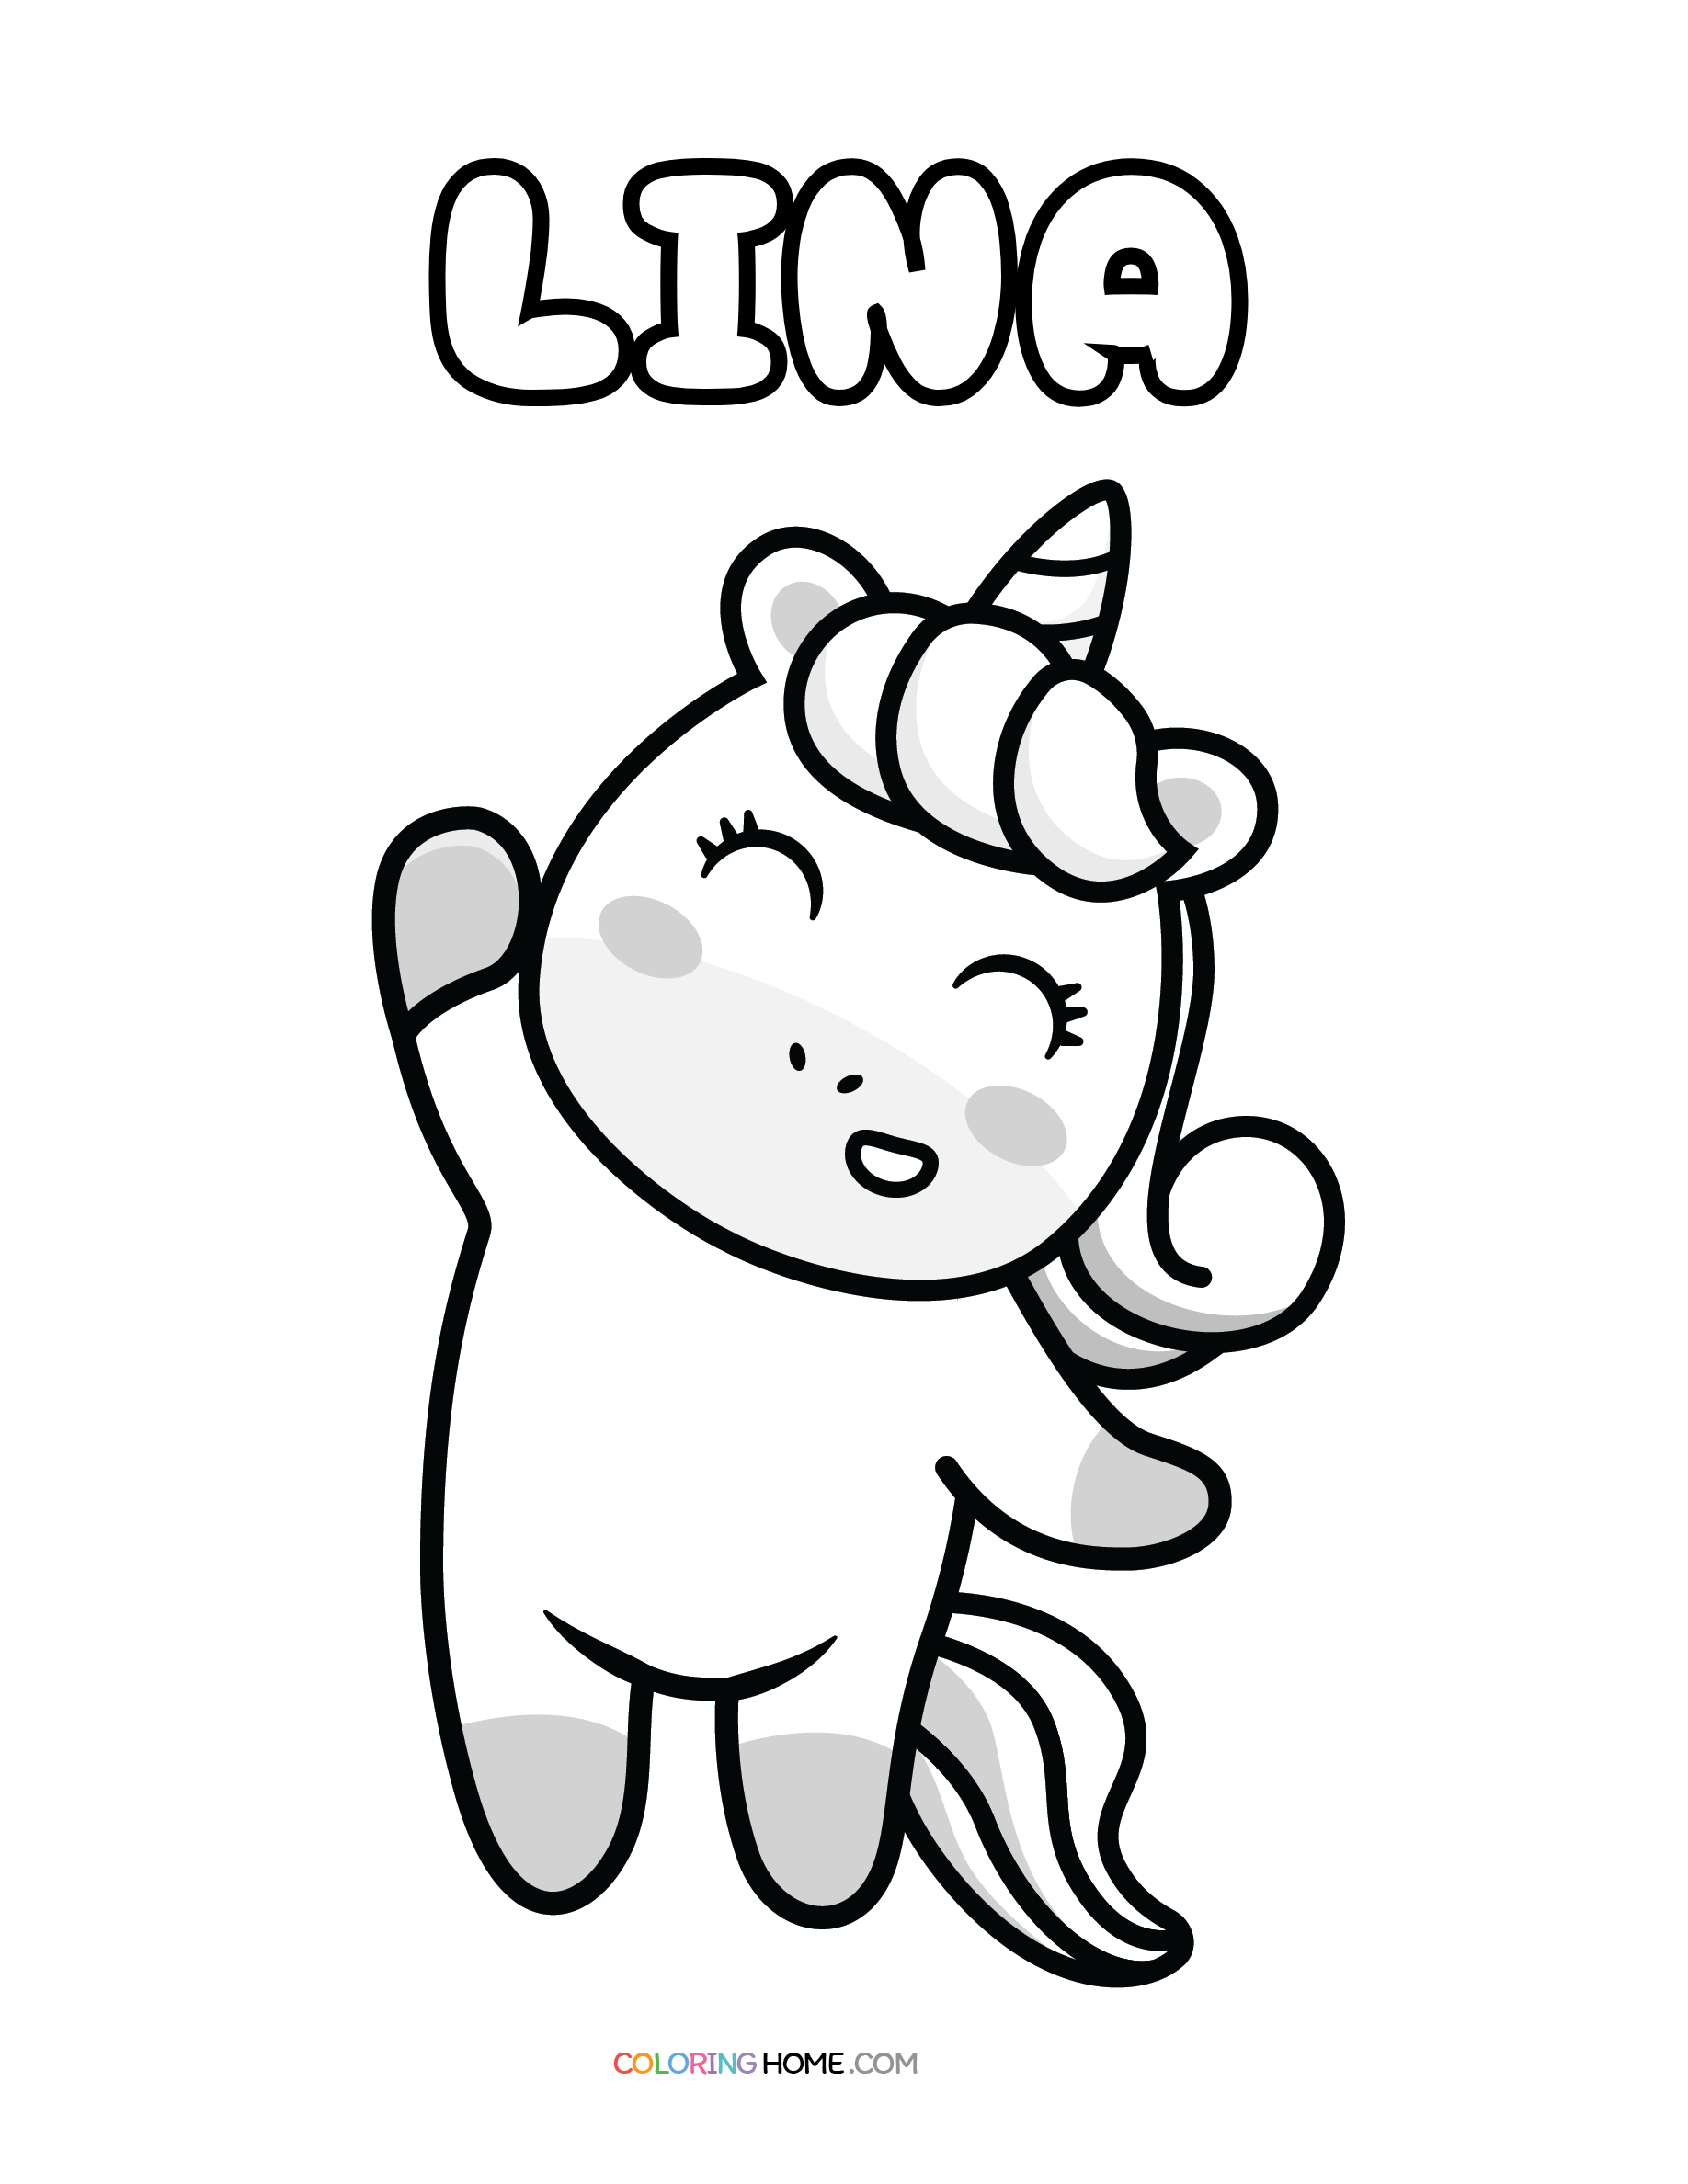 Lina unicorn coloring page